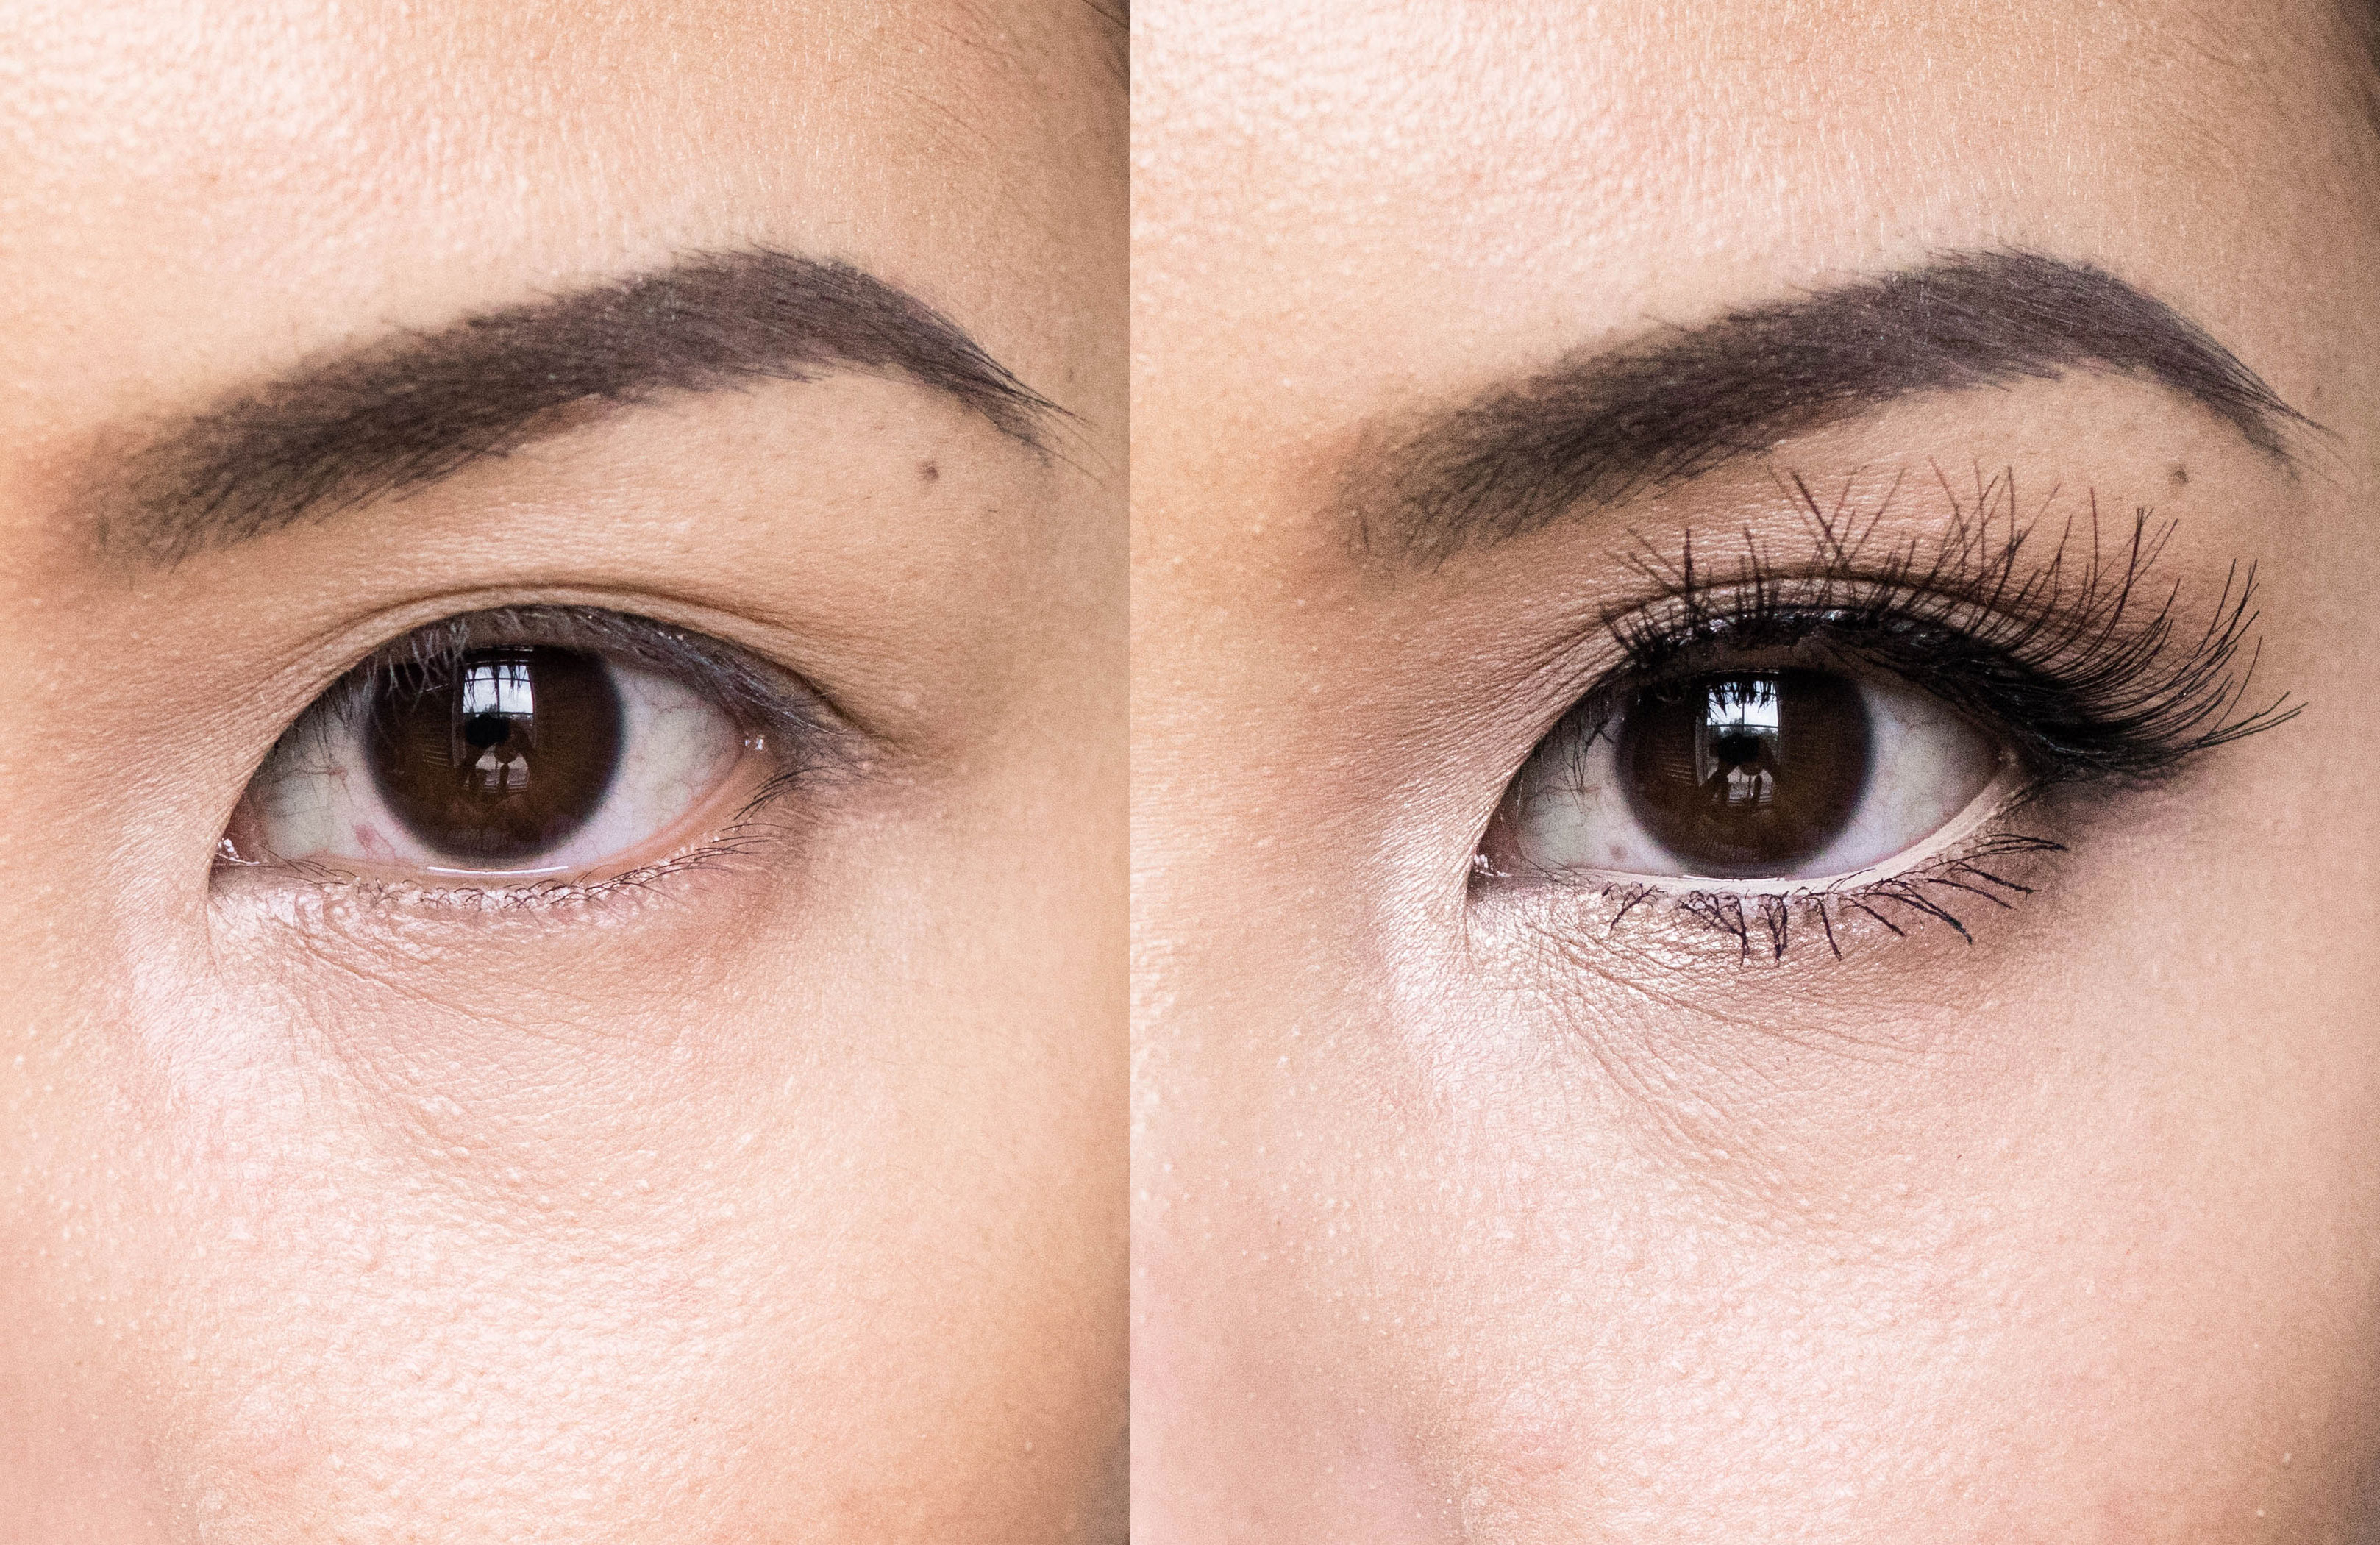 Eyeshadow Makeup For Asian Eyes How To Make Asian Eyes Look Bigger